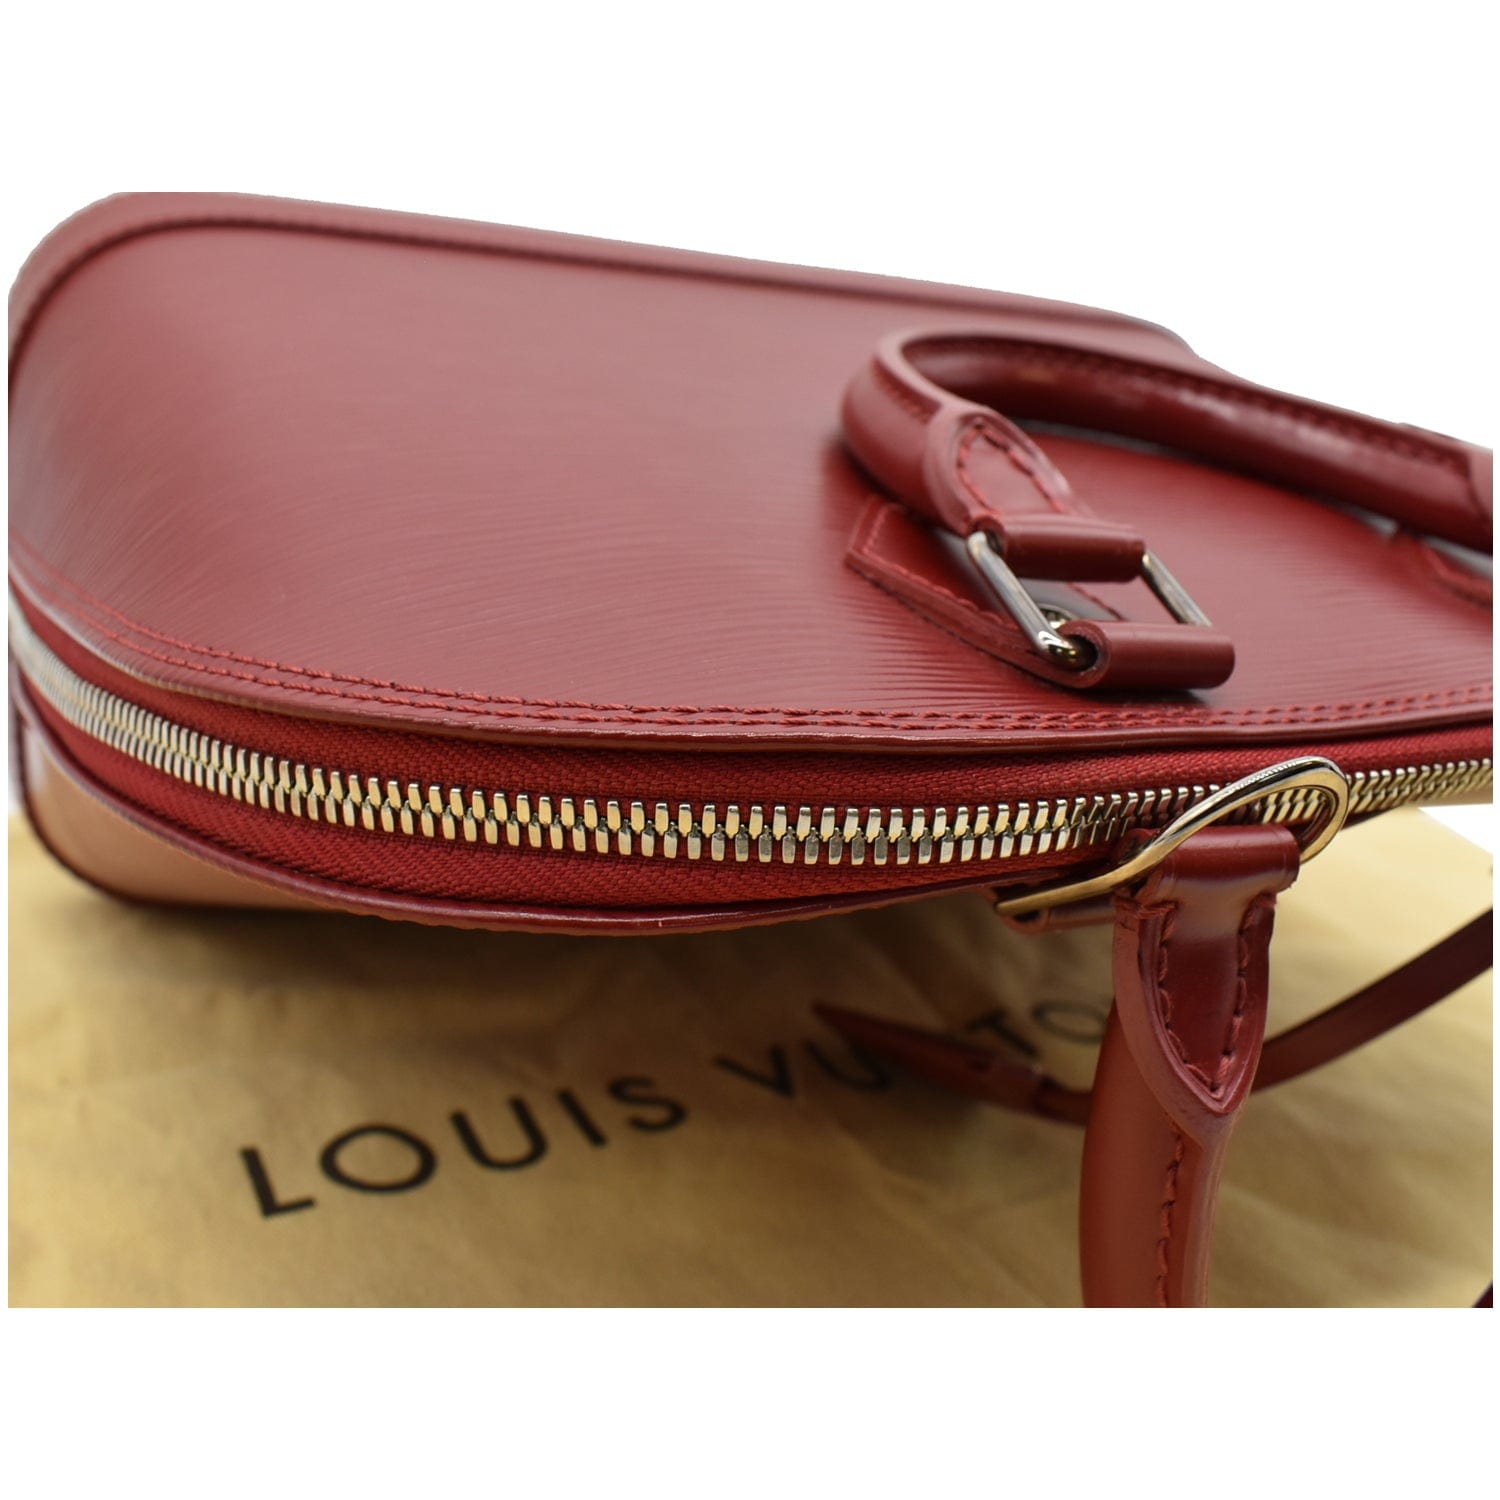 Authentic Louis Vuitton Epi Leather Alma BB in Red Satchel handbag